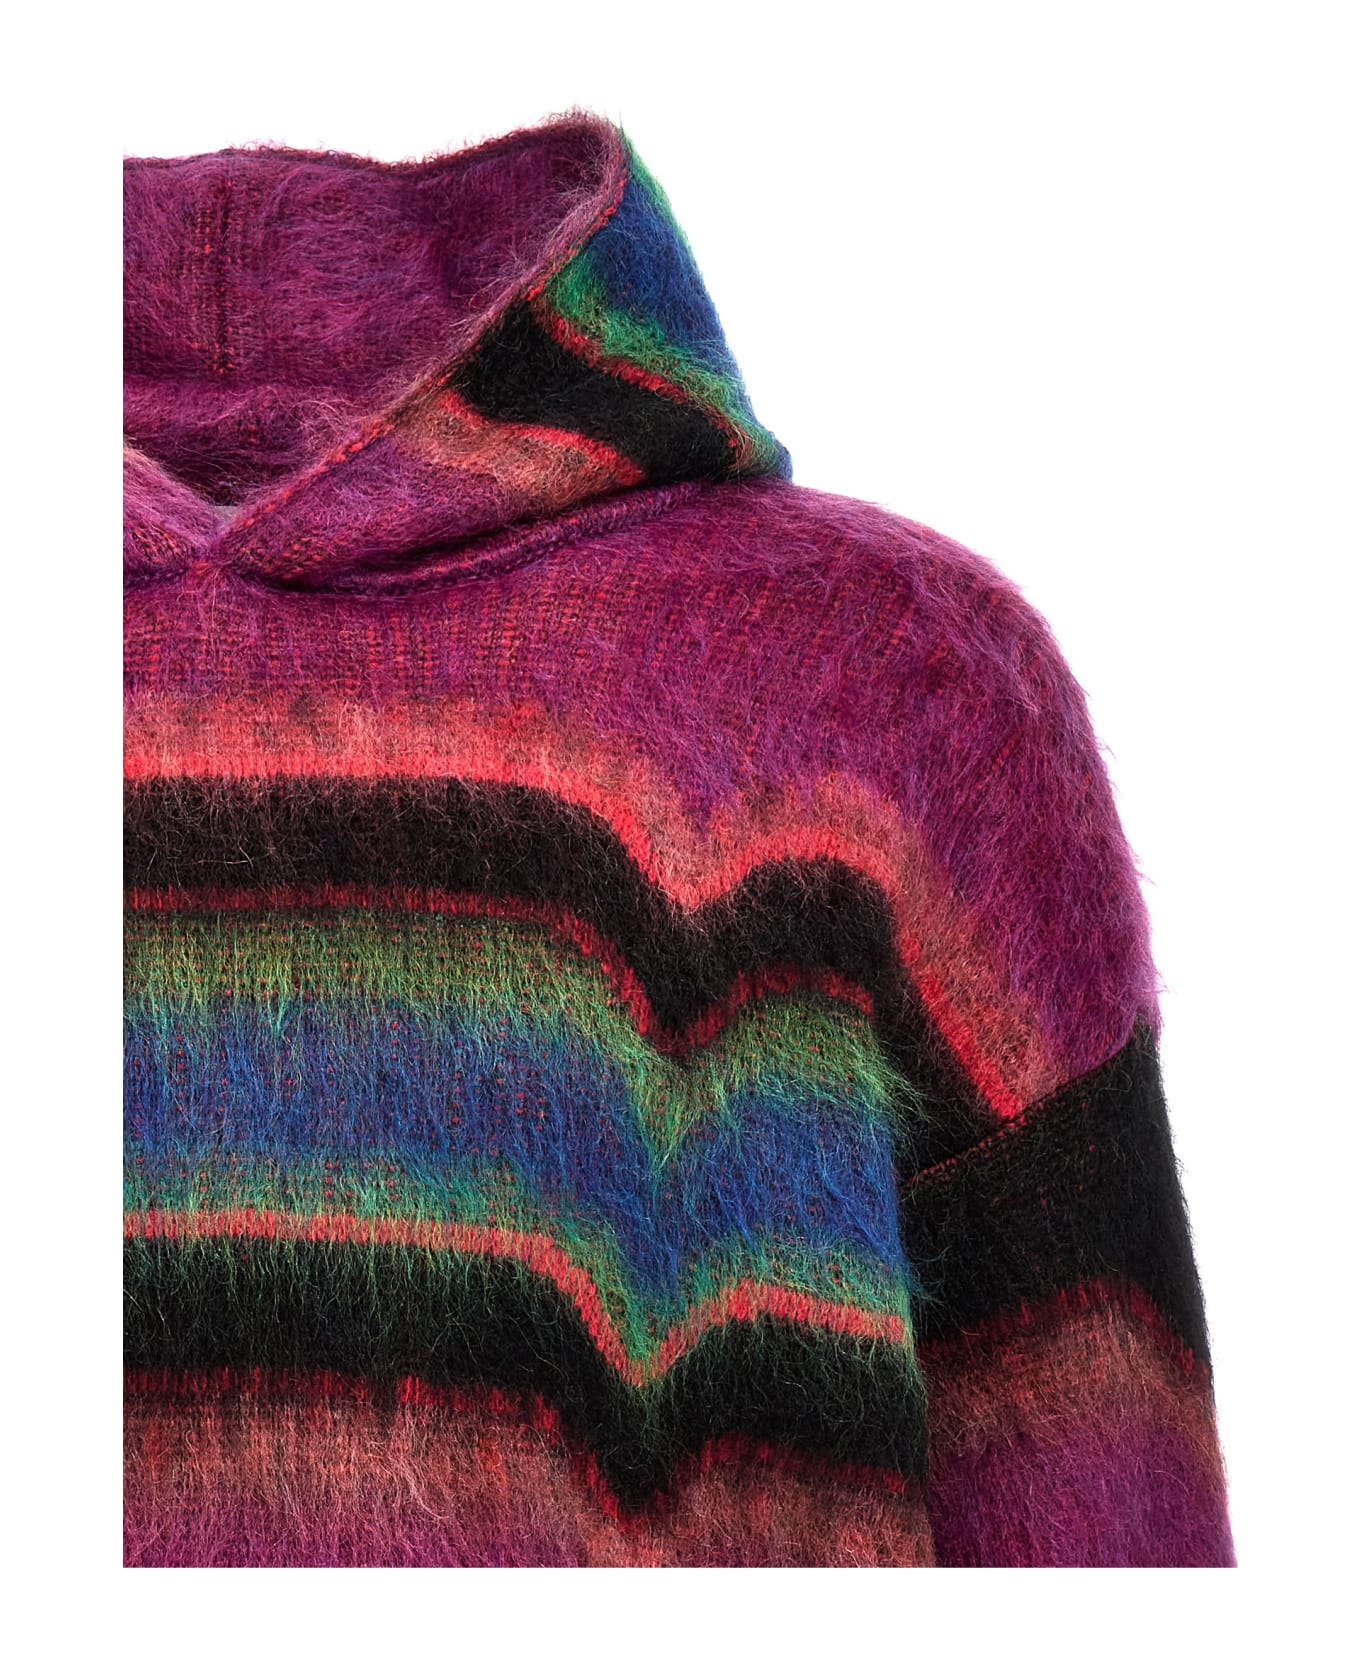 Avril8790 'skateboard' Hooded Sweater - Multicolor